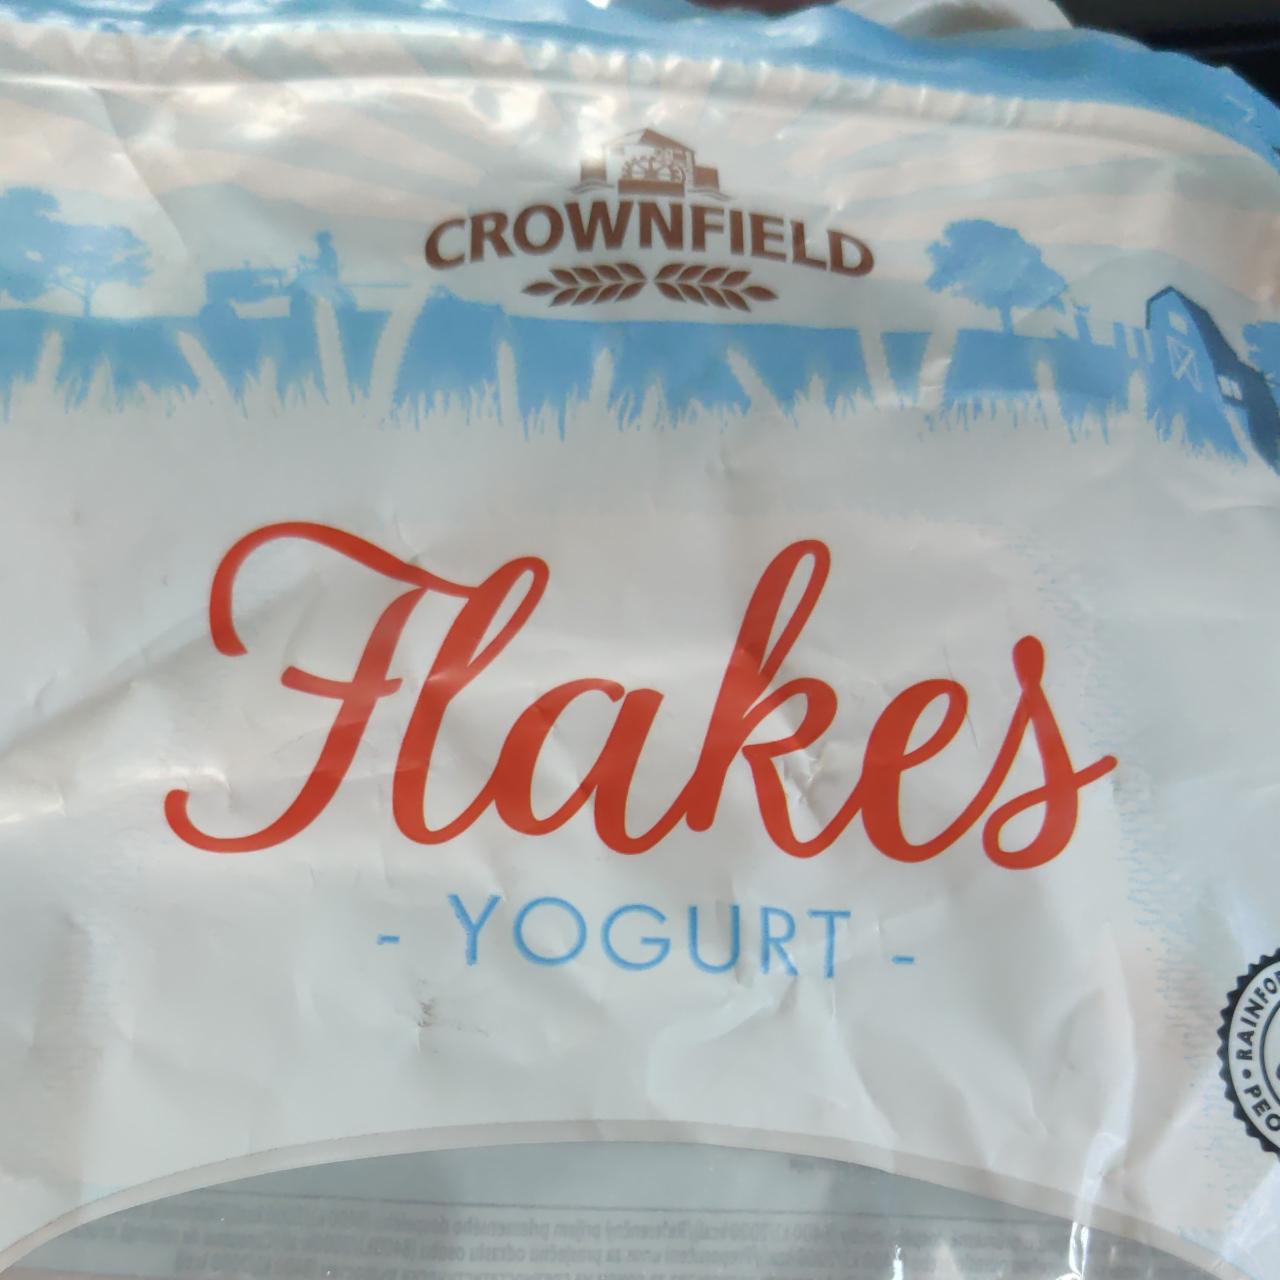 Fotografie - Flakes yogurt Crownfield